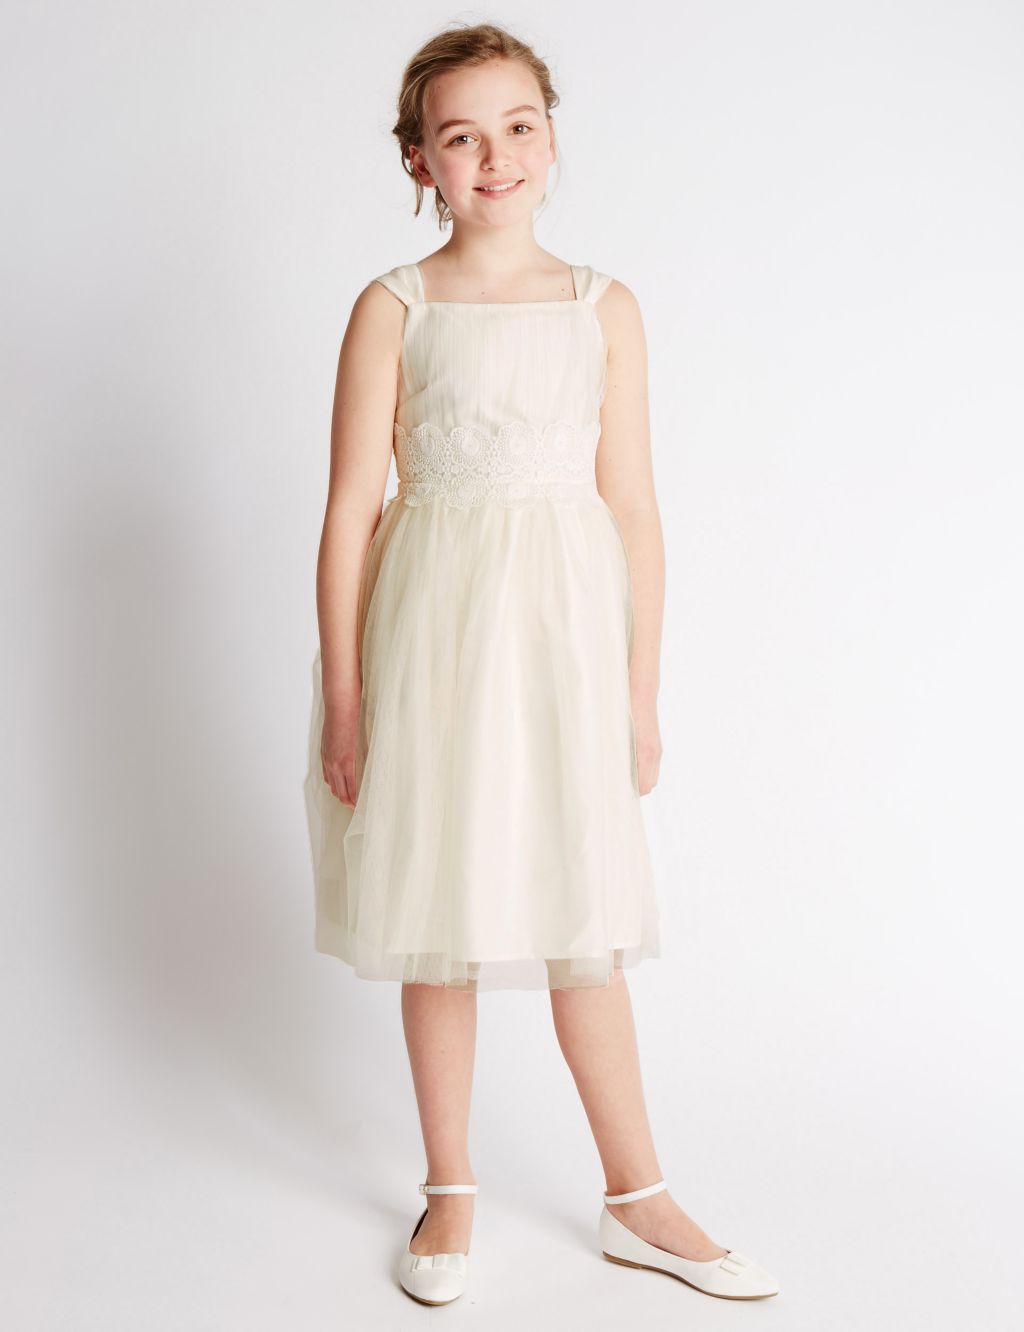 Sleeveless Tulle Dress (7-14 Years) 3 of 3